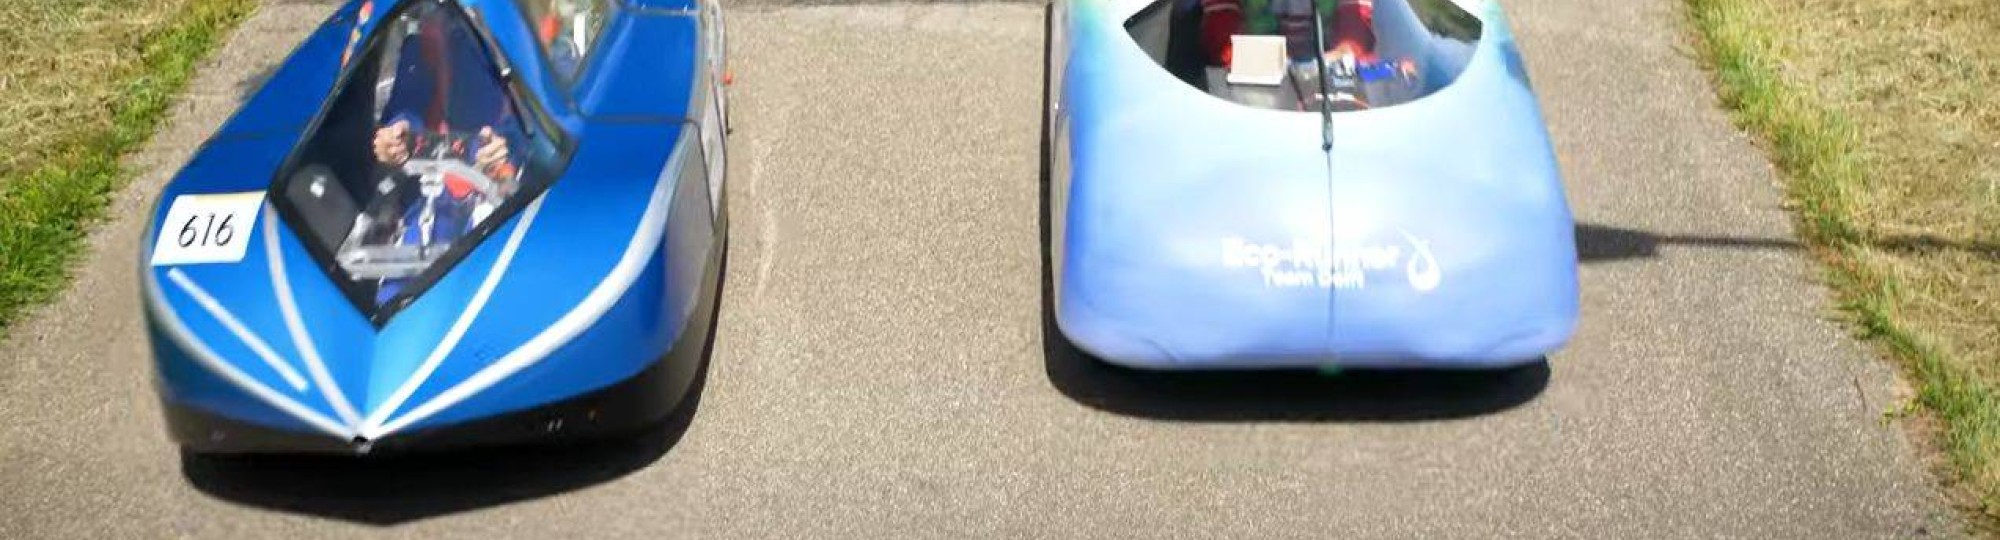 Hydromotive HM10 waterstofauto in race met Ecorunner TU Delft 2020